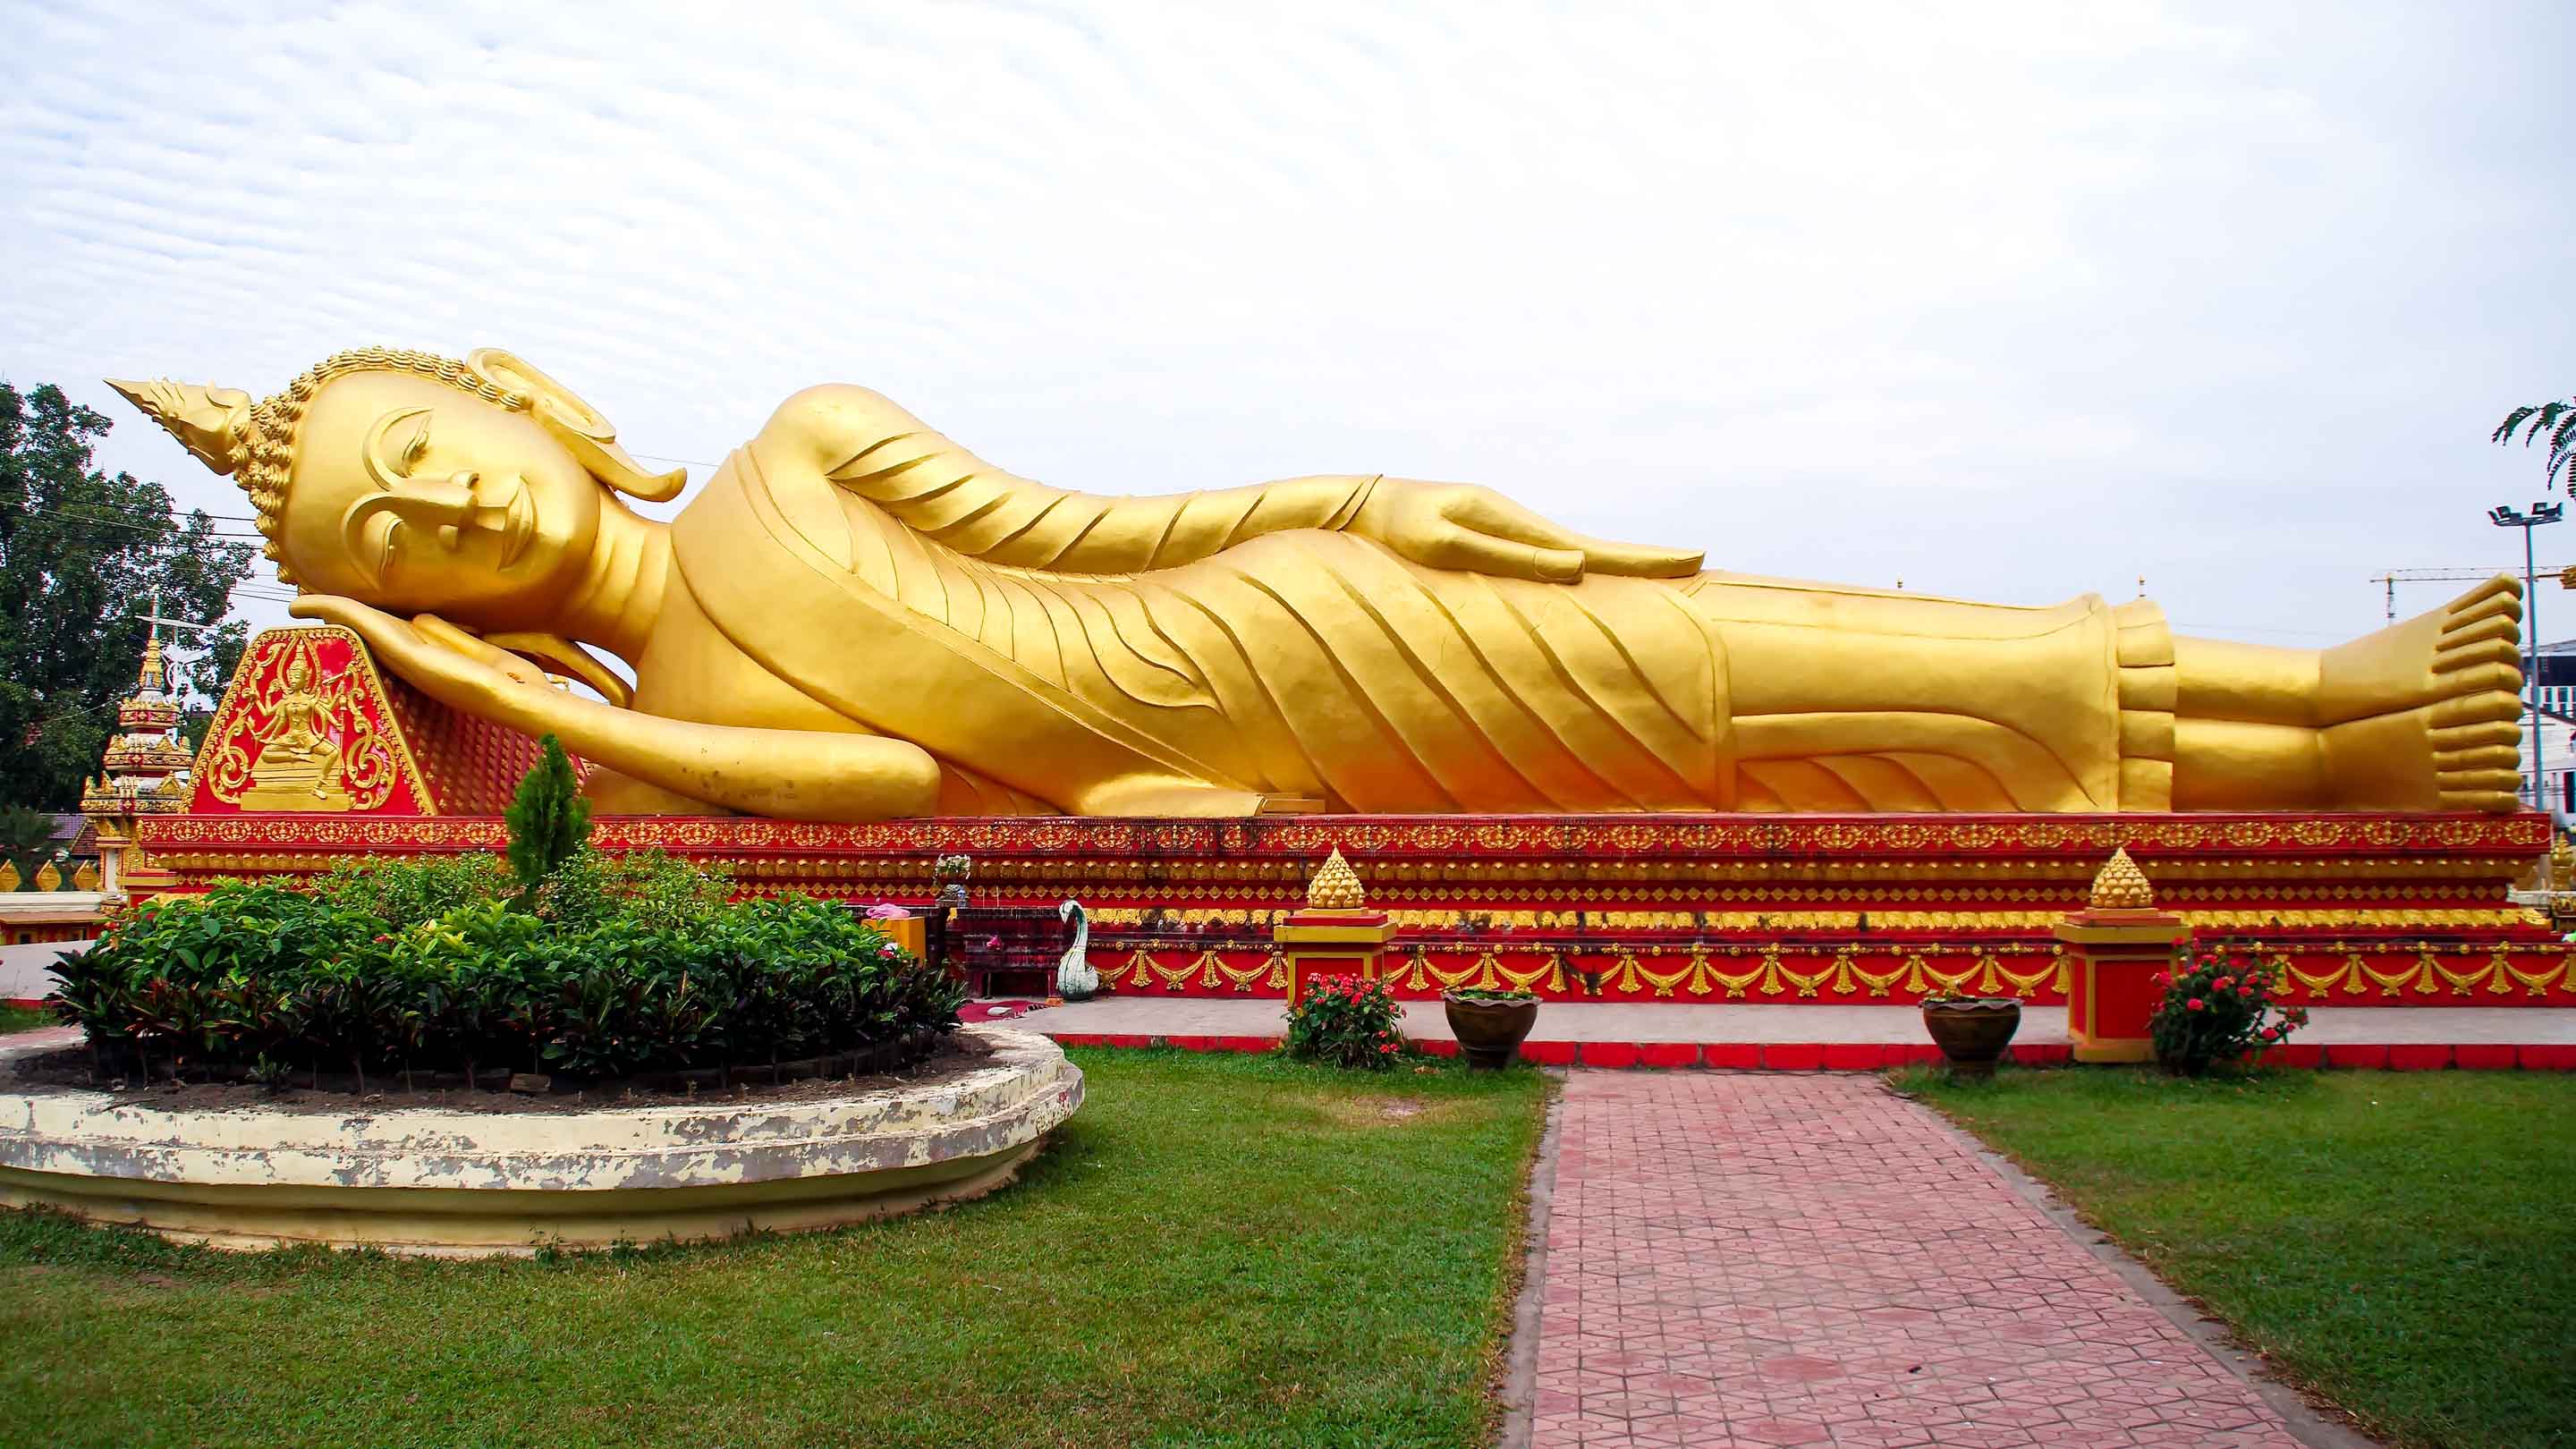 Giant golden statue in Vientiane, Laos